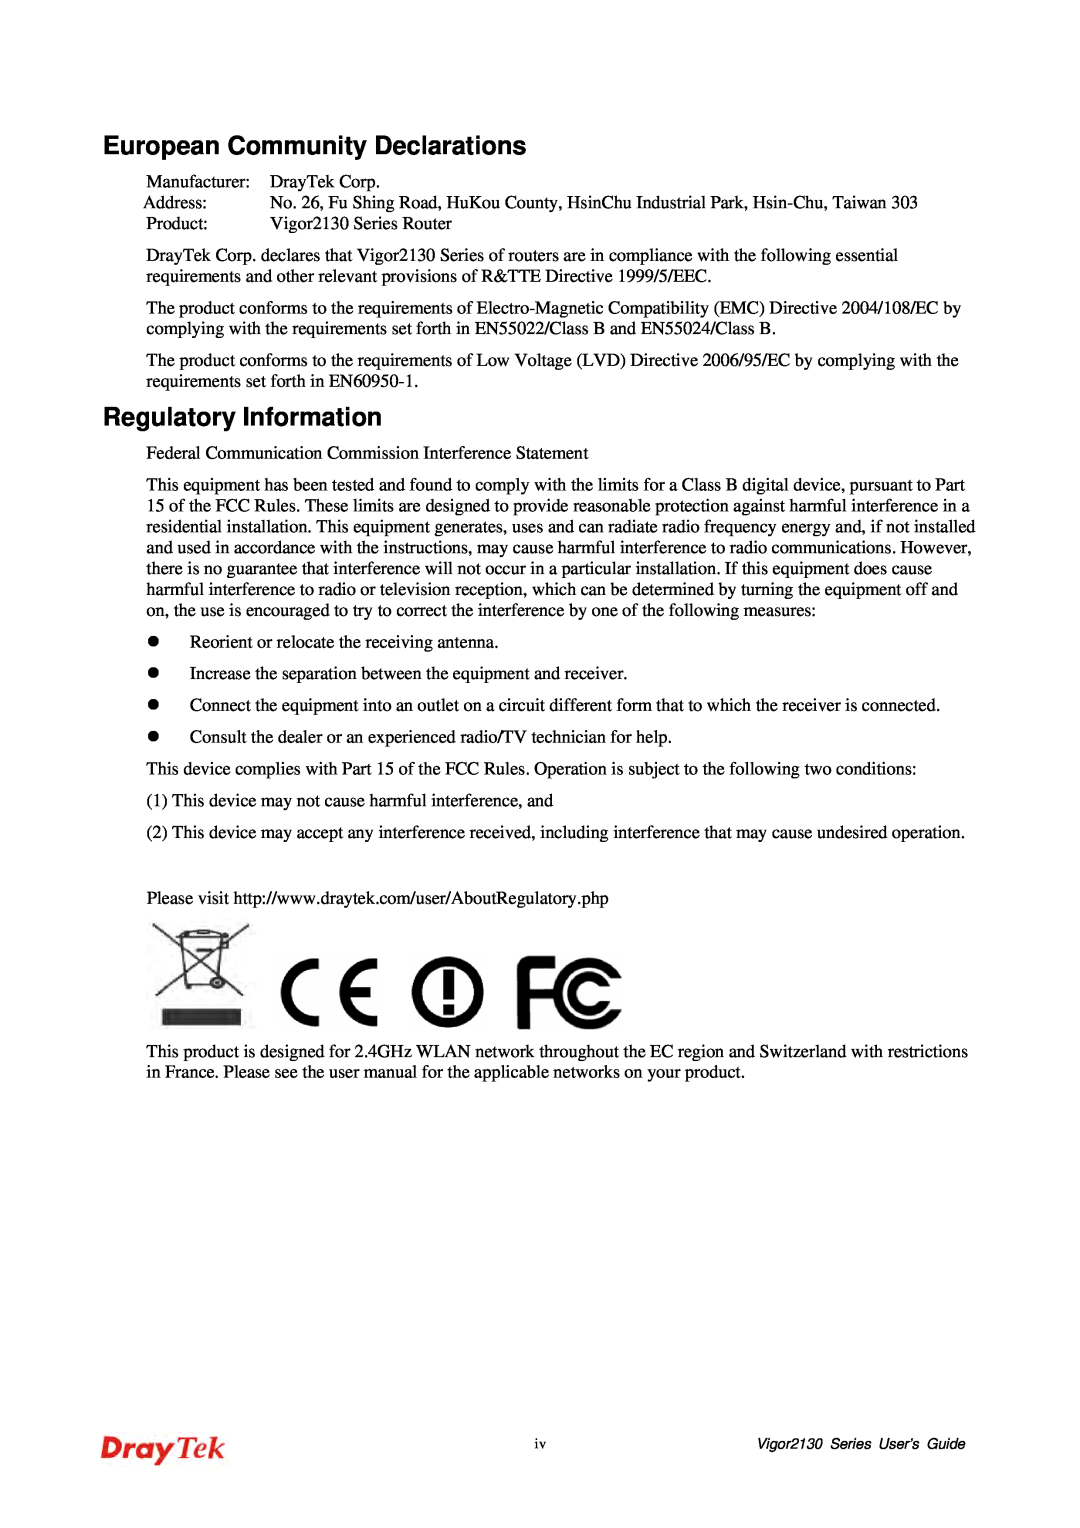 Draytek 2130 manual European Community Declarations, Regulatory Information 